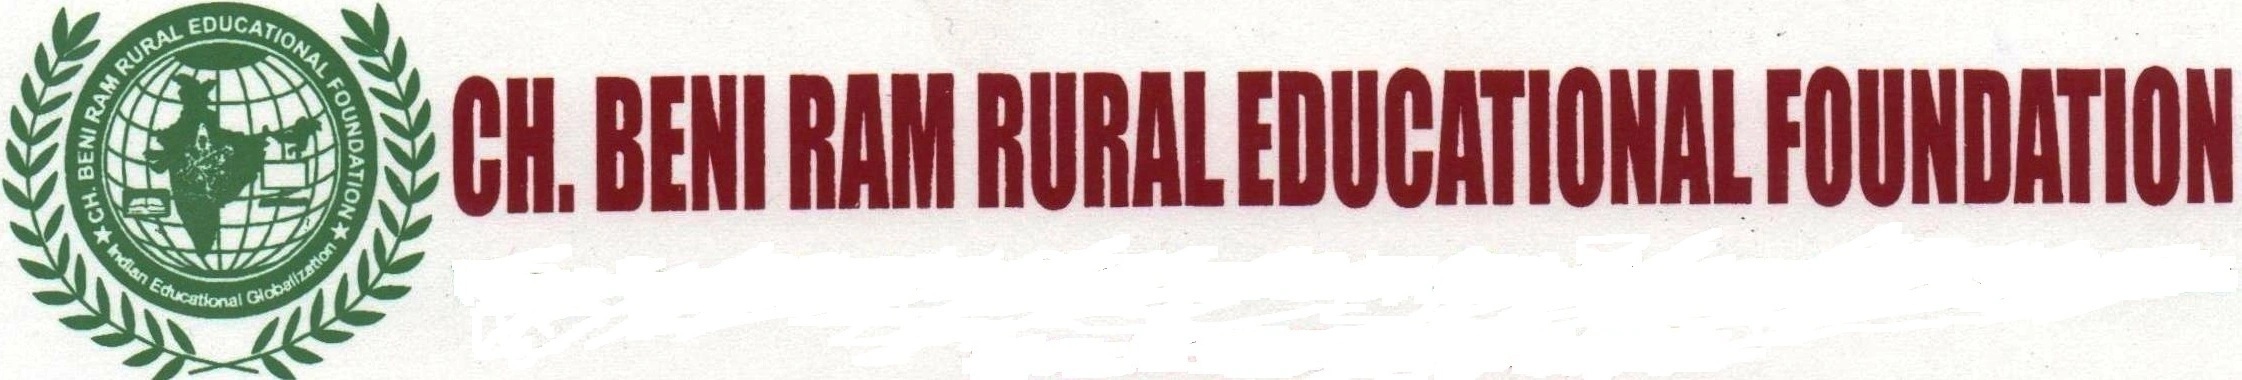 Ch. Beni Ram Rural Educational Foundation